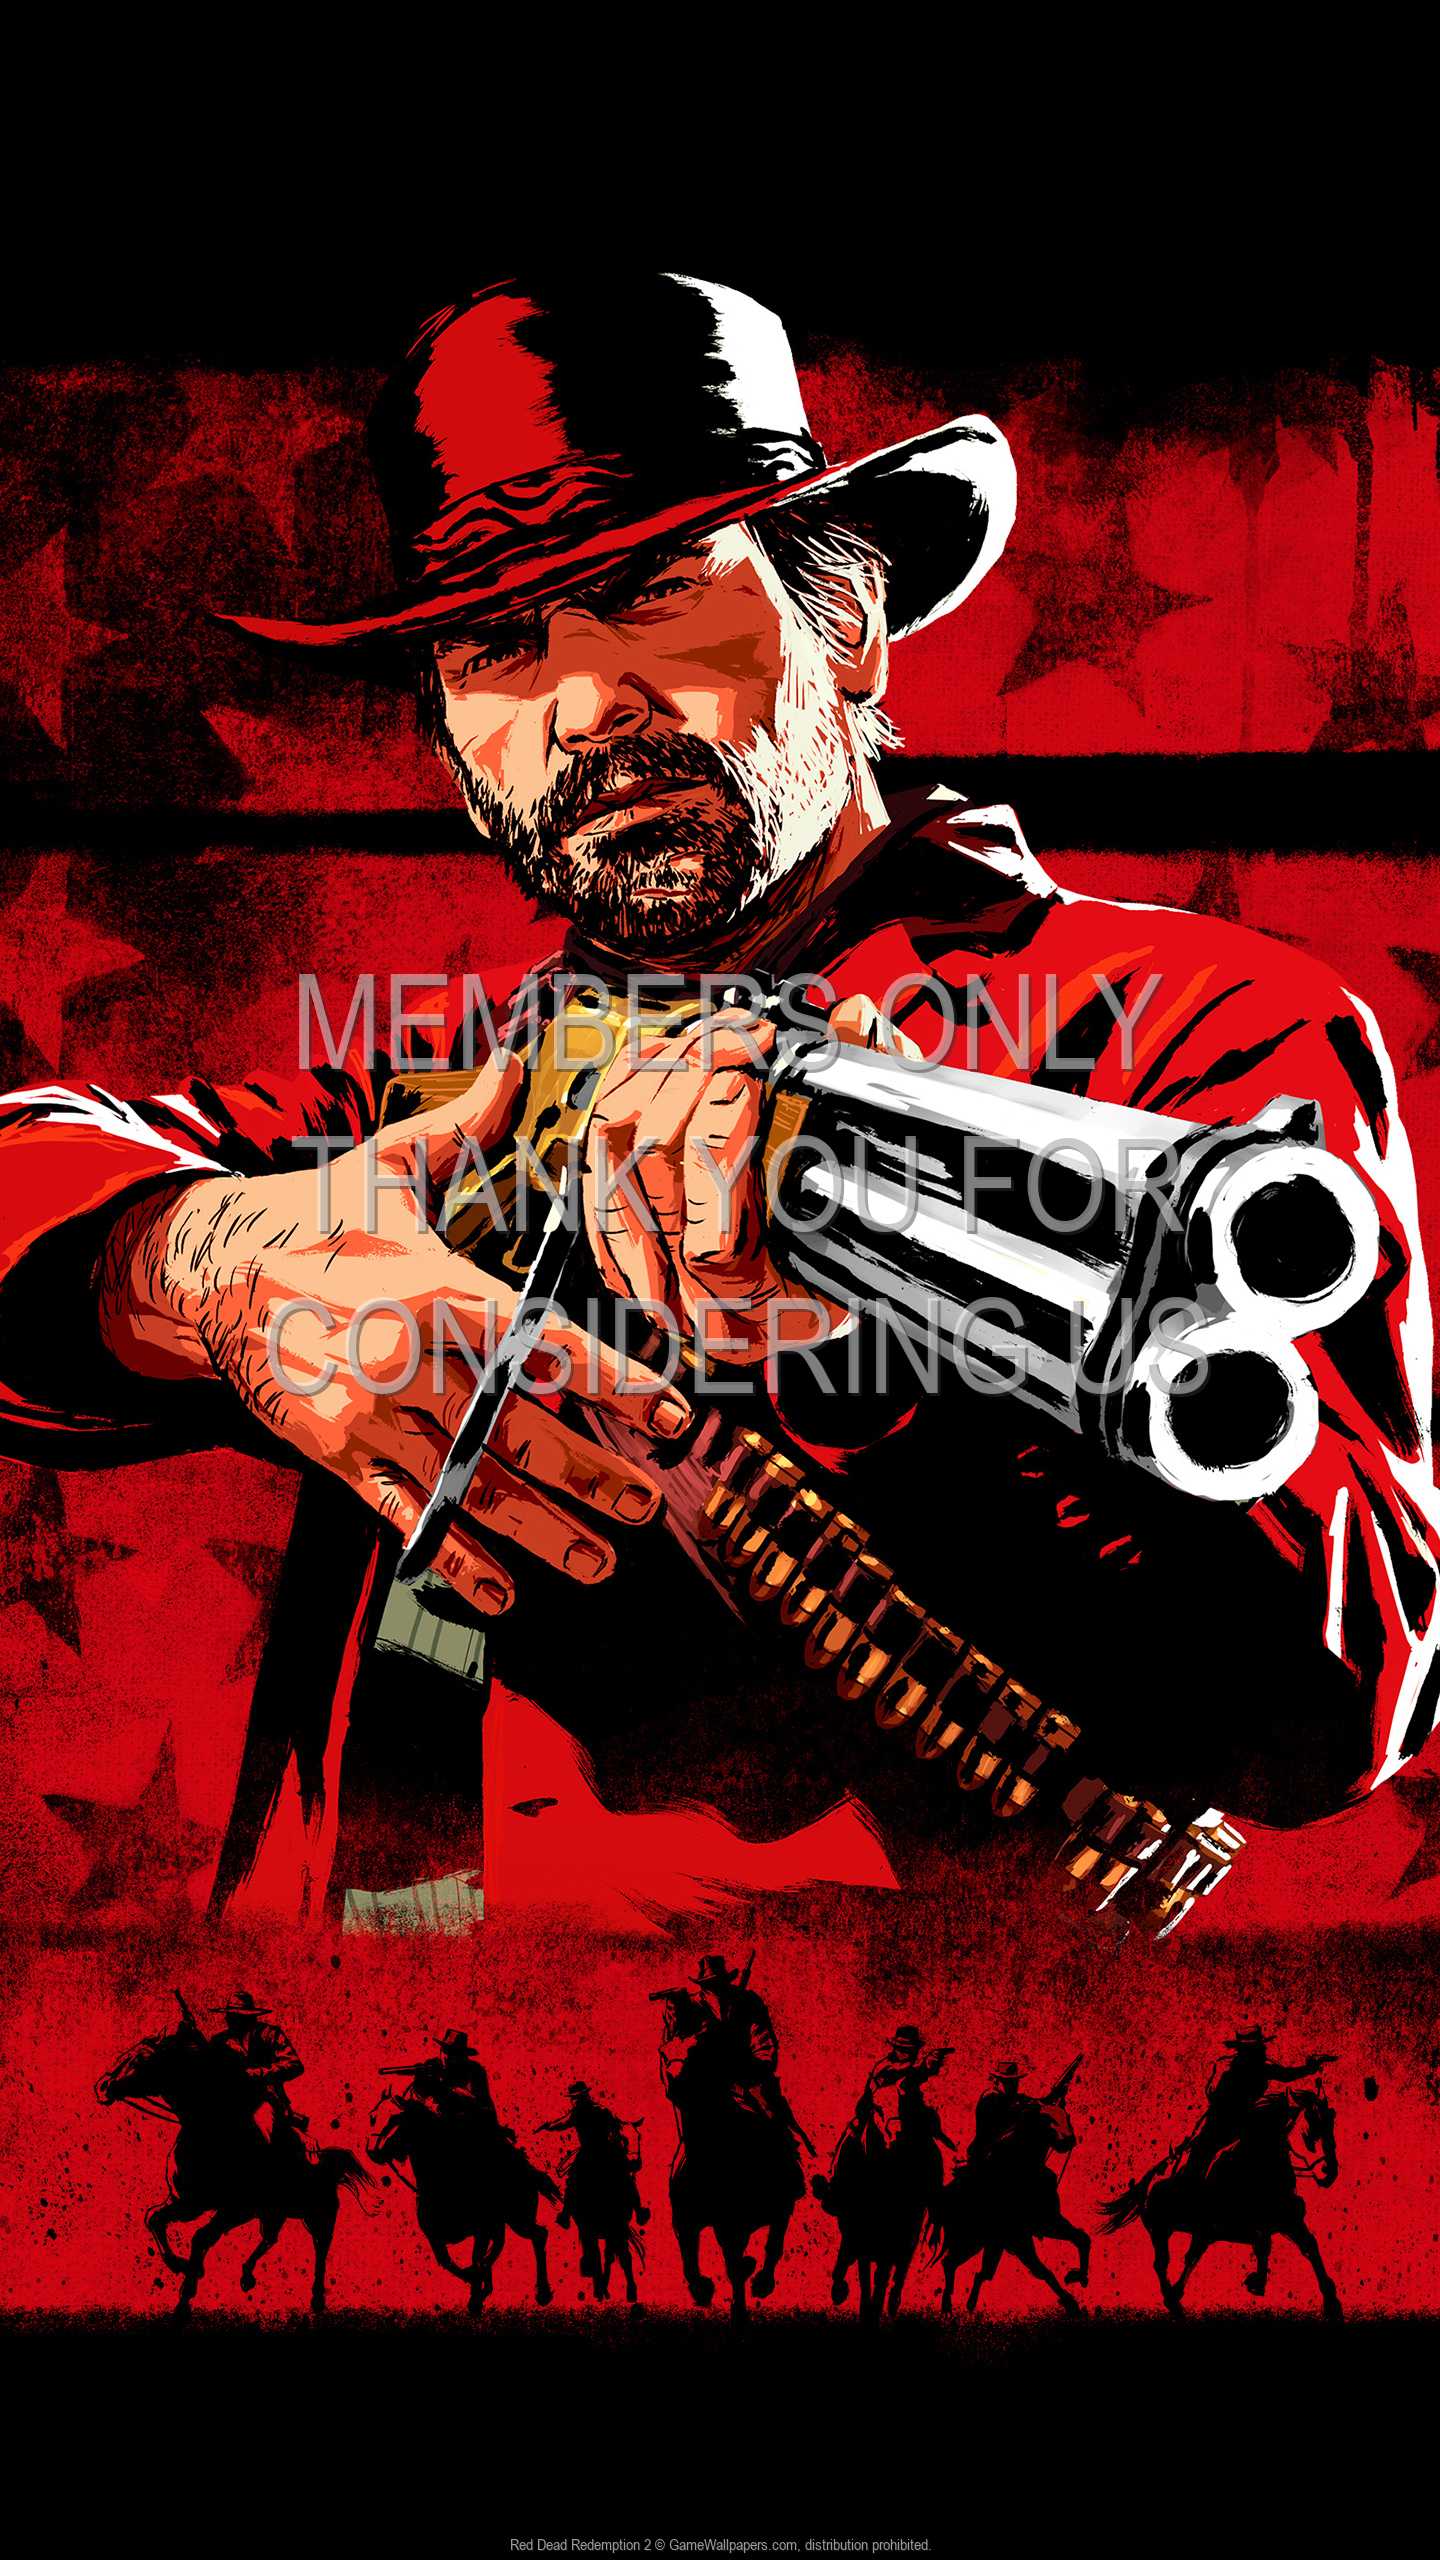 Red Dead Redemption 2 1440p Vertical Mobile wallpaper or background 04